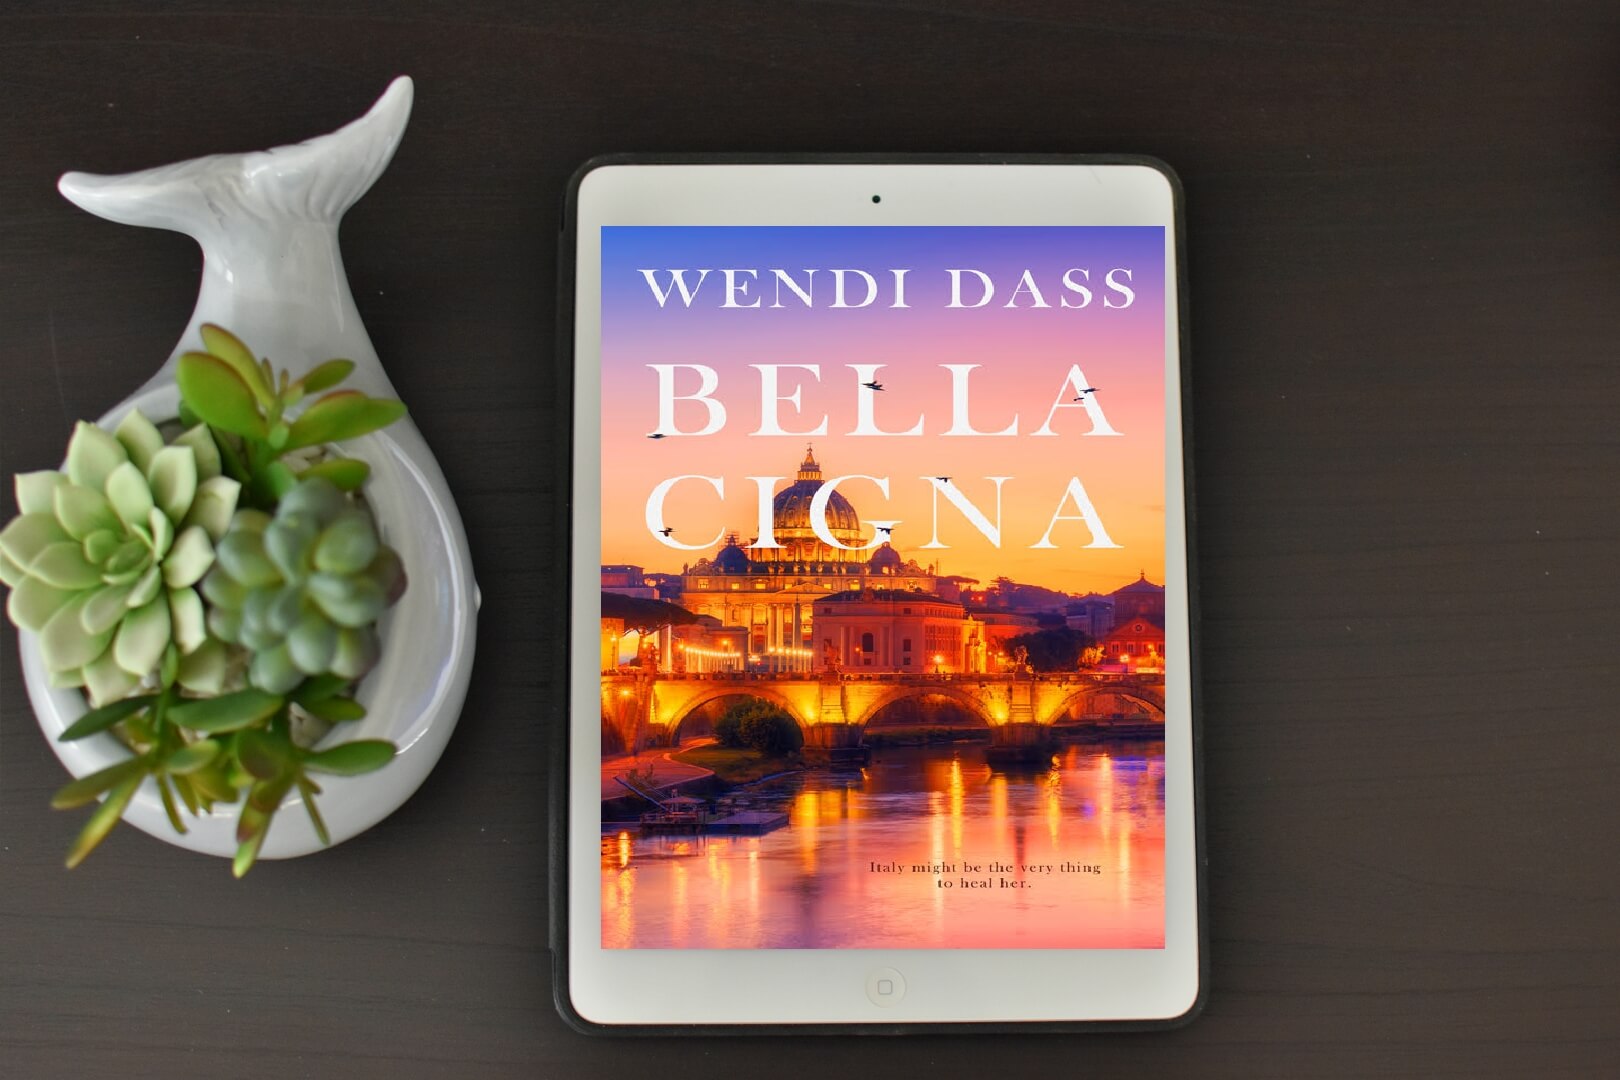 Review: Bella Cigna by Wendi Dass